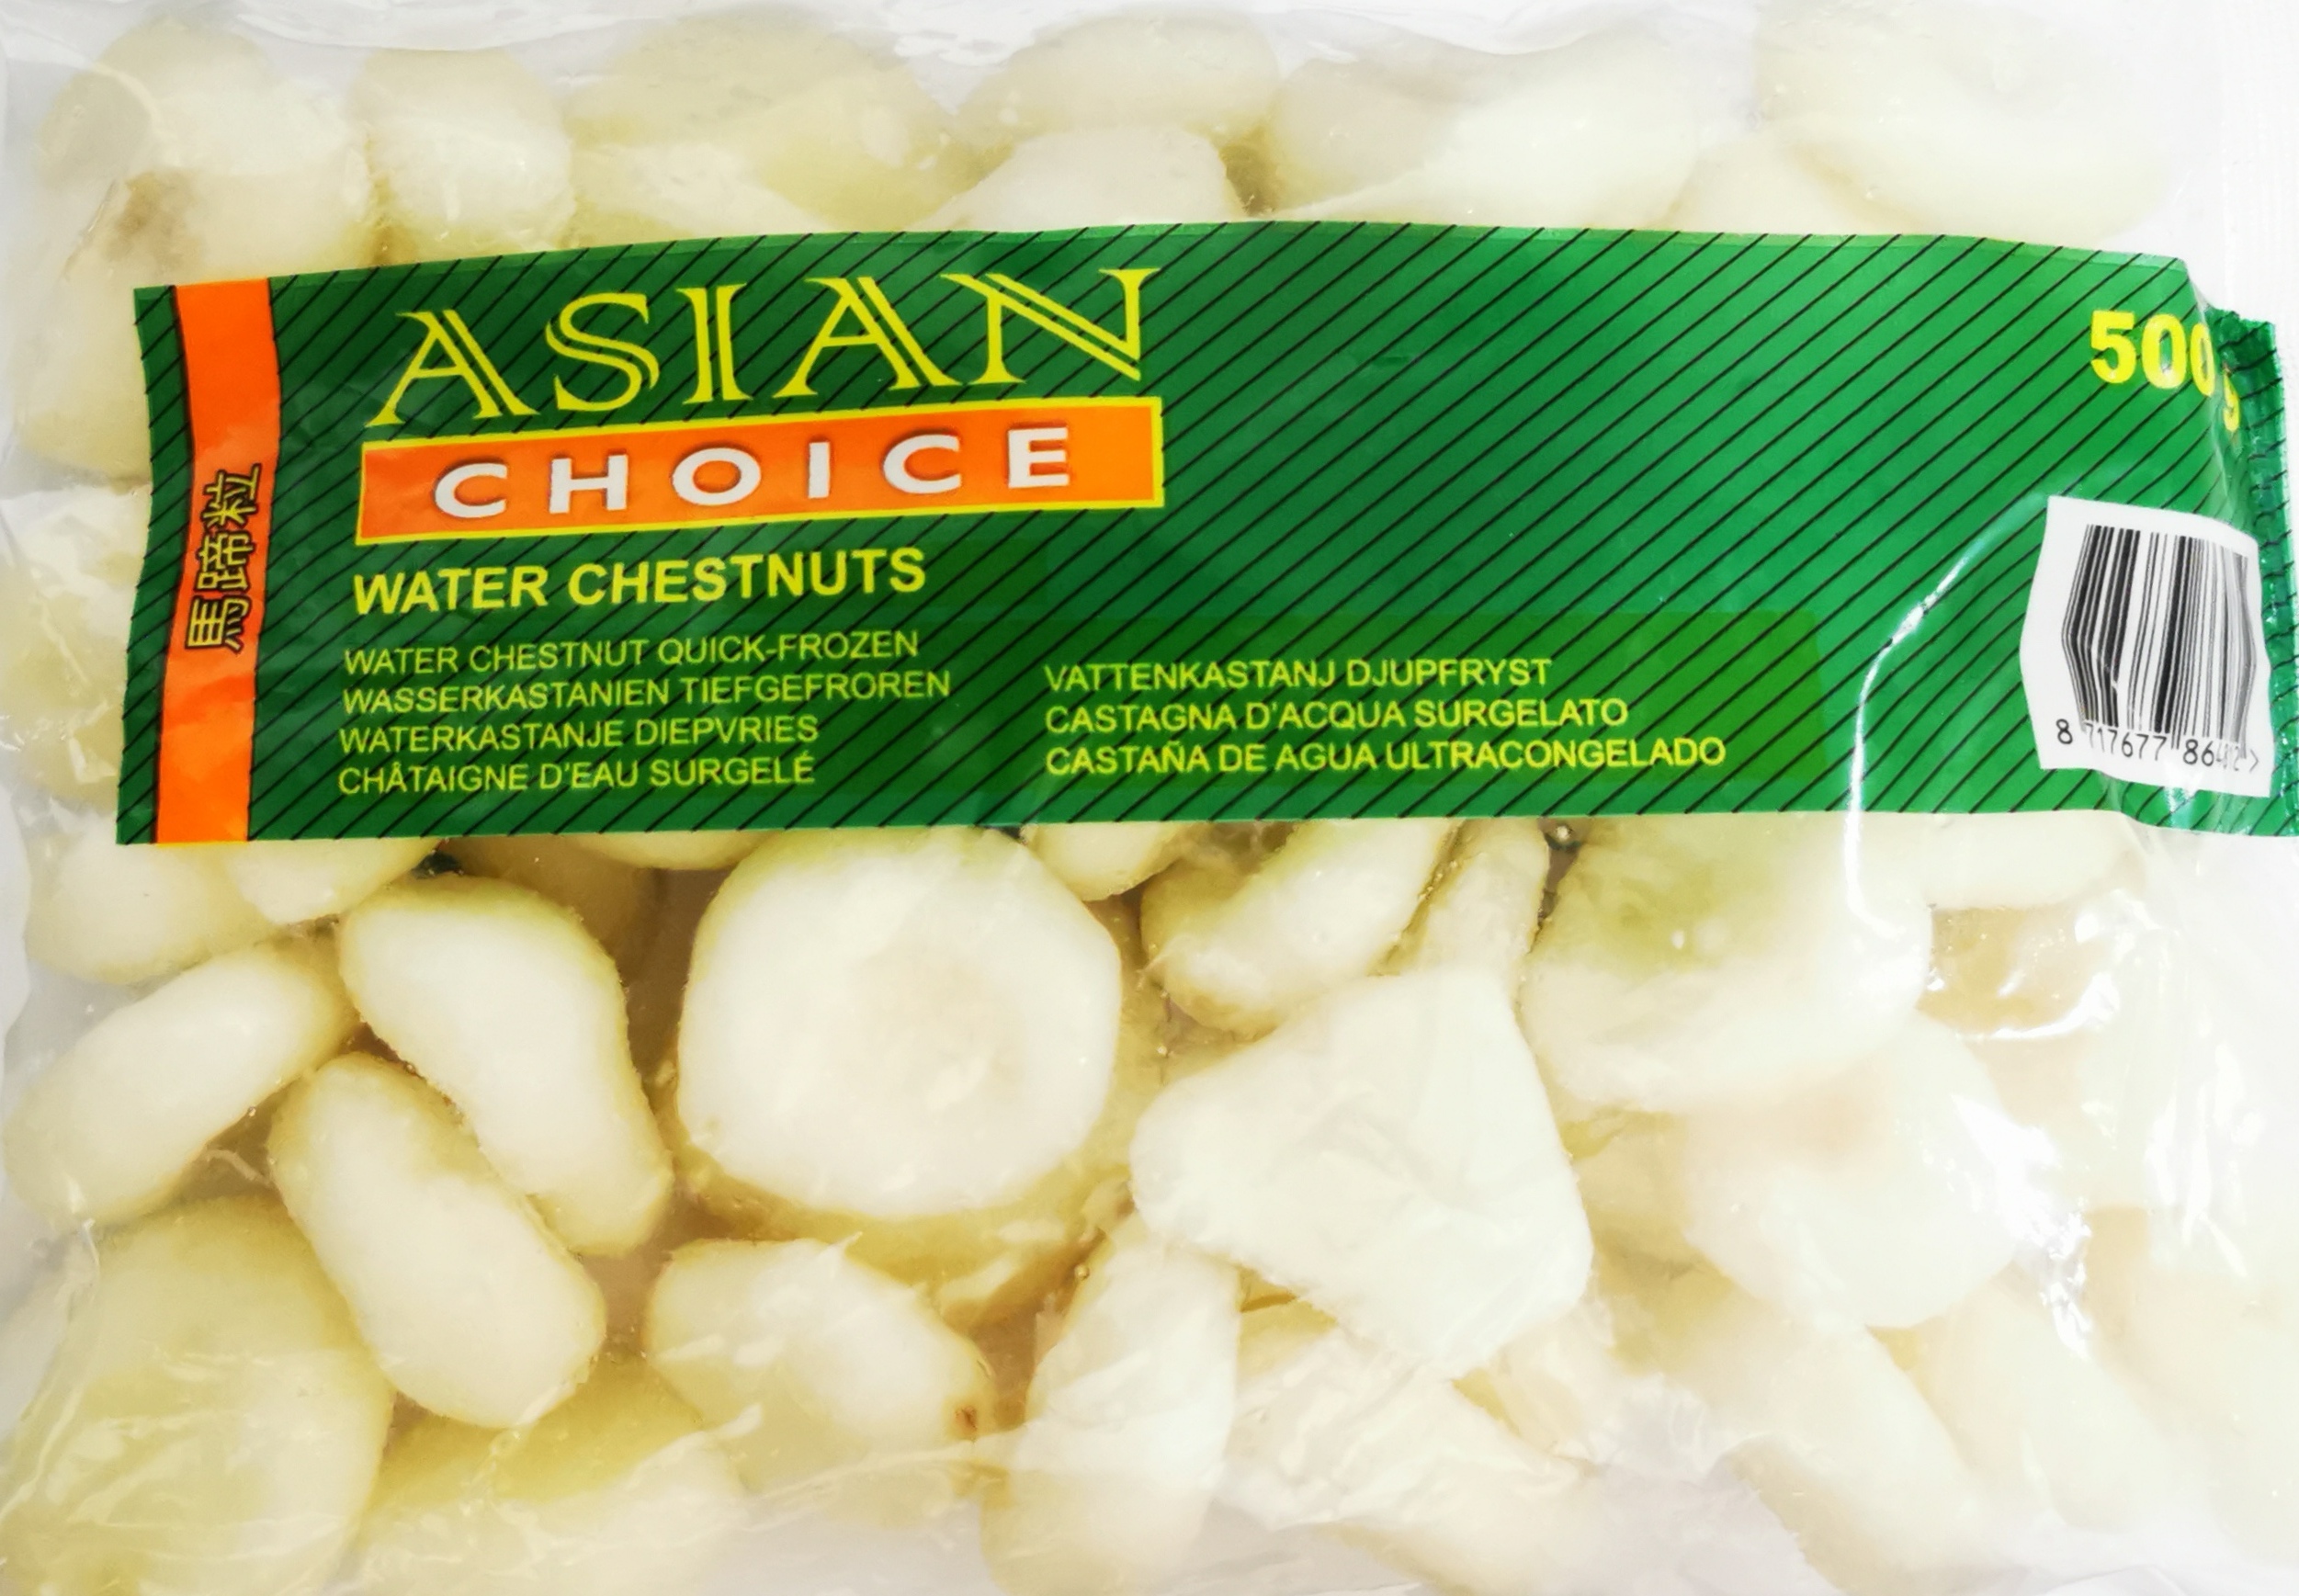 Water chestnuts 500g